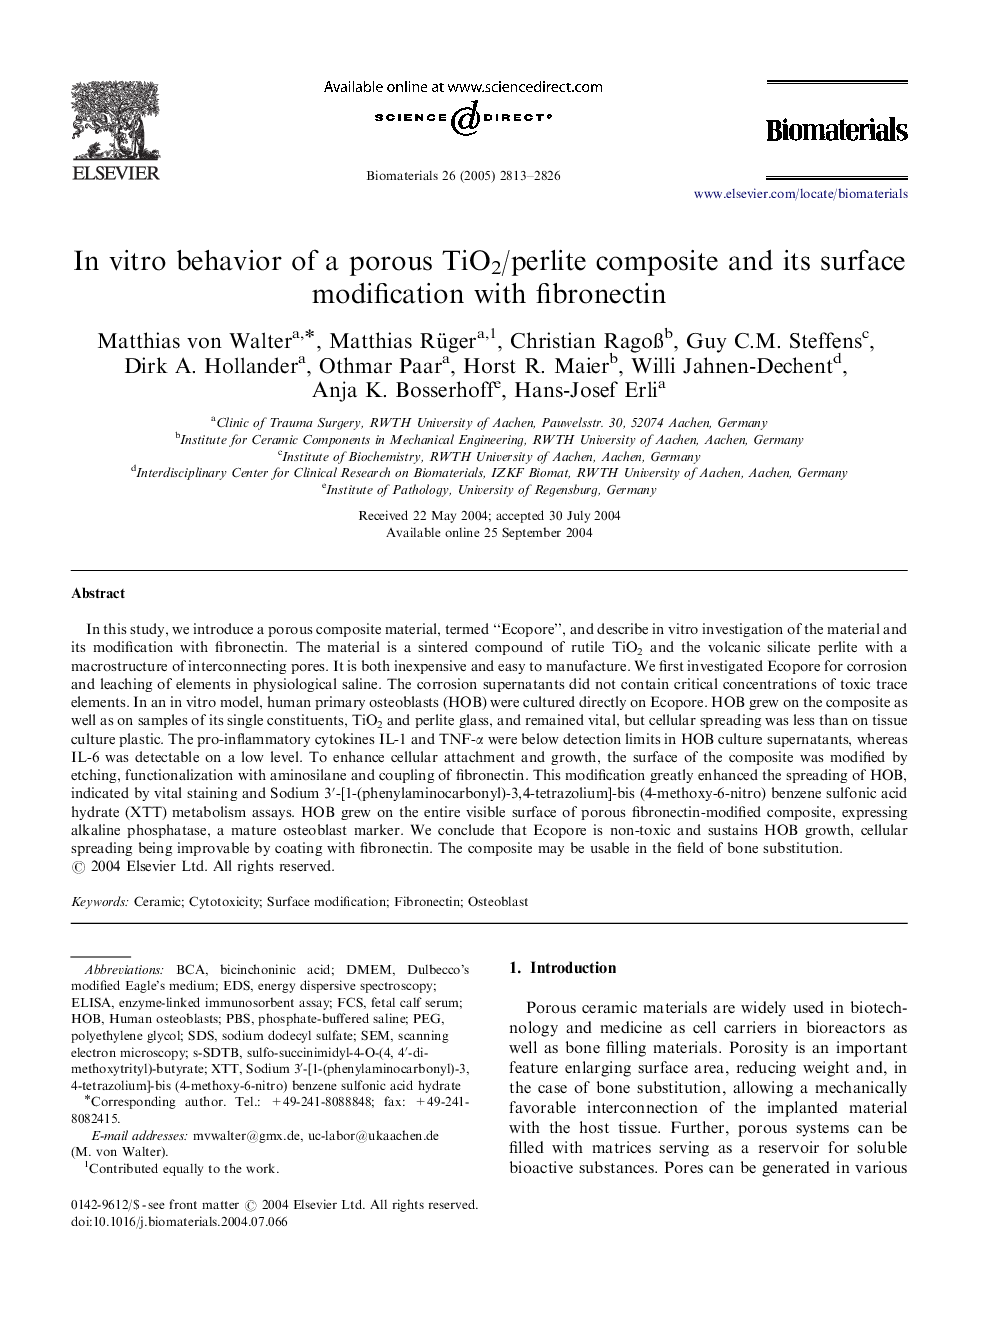 In vitro behavior of a porous TiO2/perlite composite and its surface modification with fibronectin